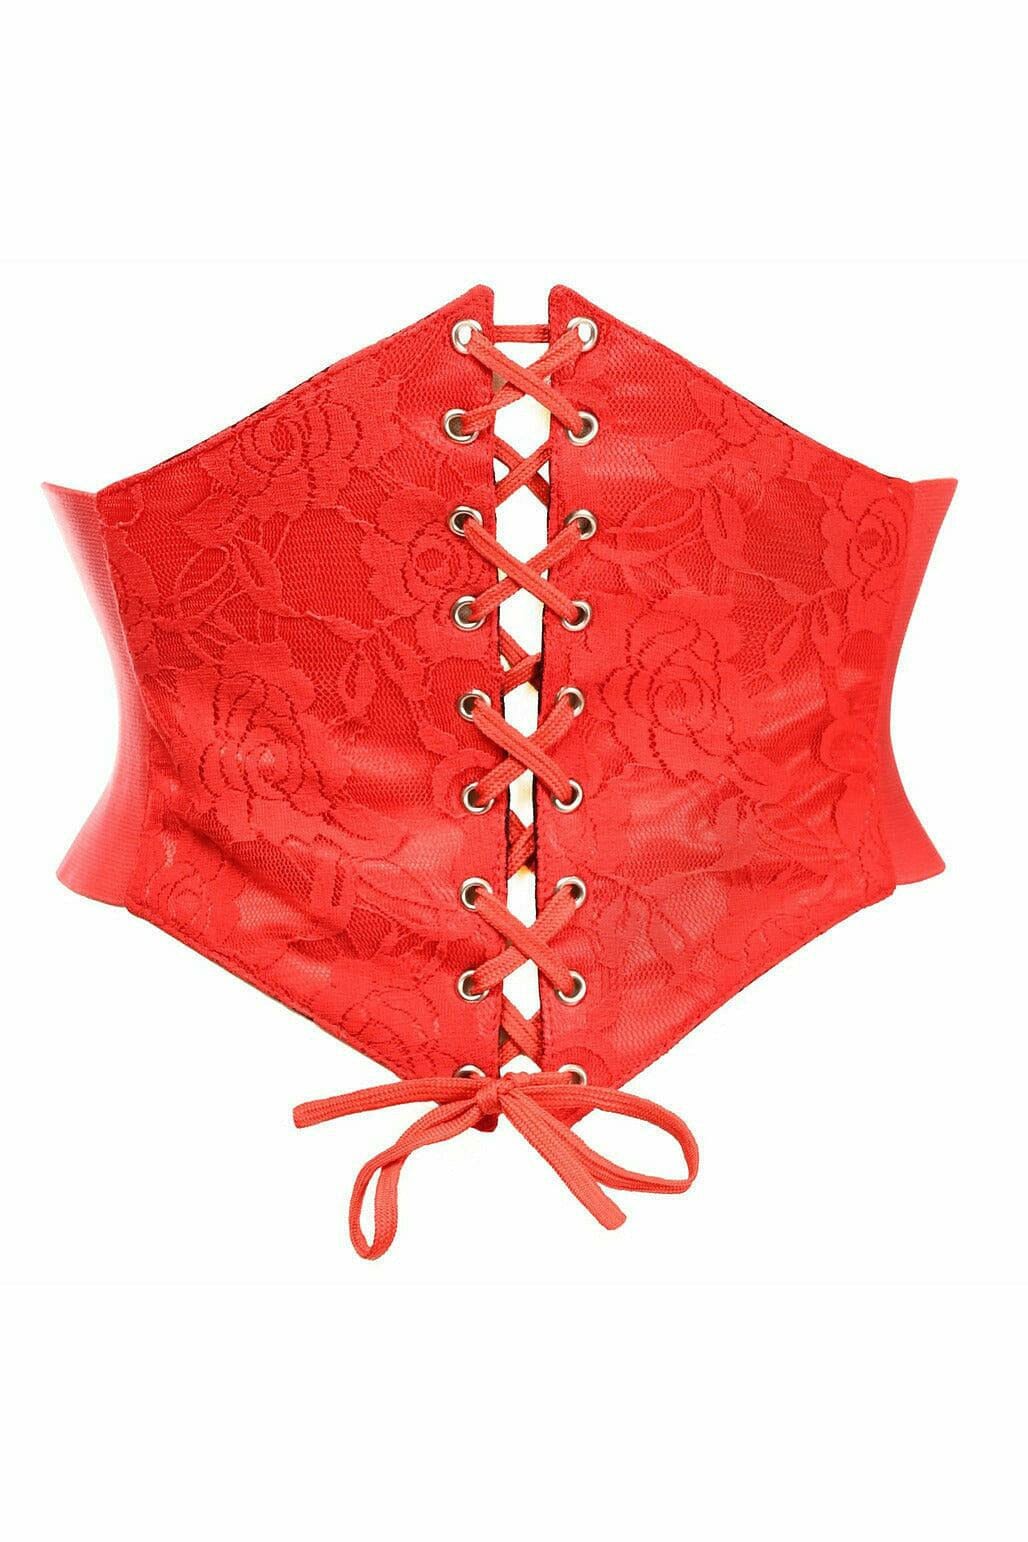 Lavish Red Lace Corset Belt Cincher-Corset Belts-Daisy Corsets-Red-S-SEXYSHOES.COM